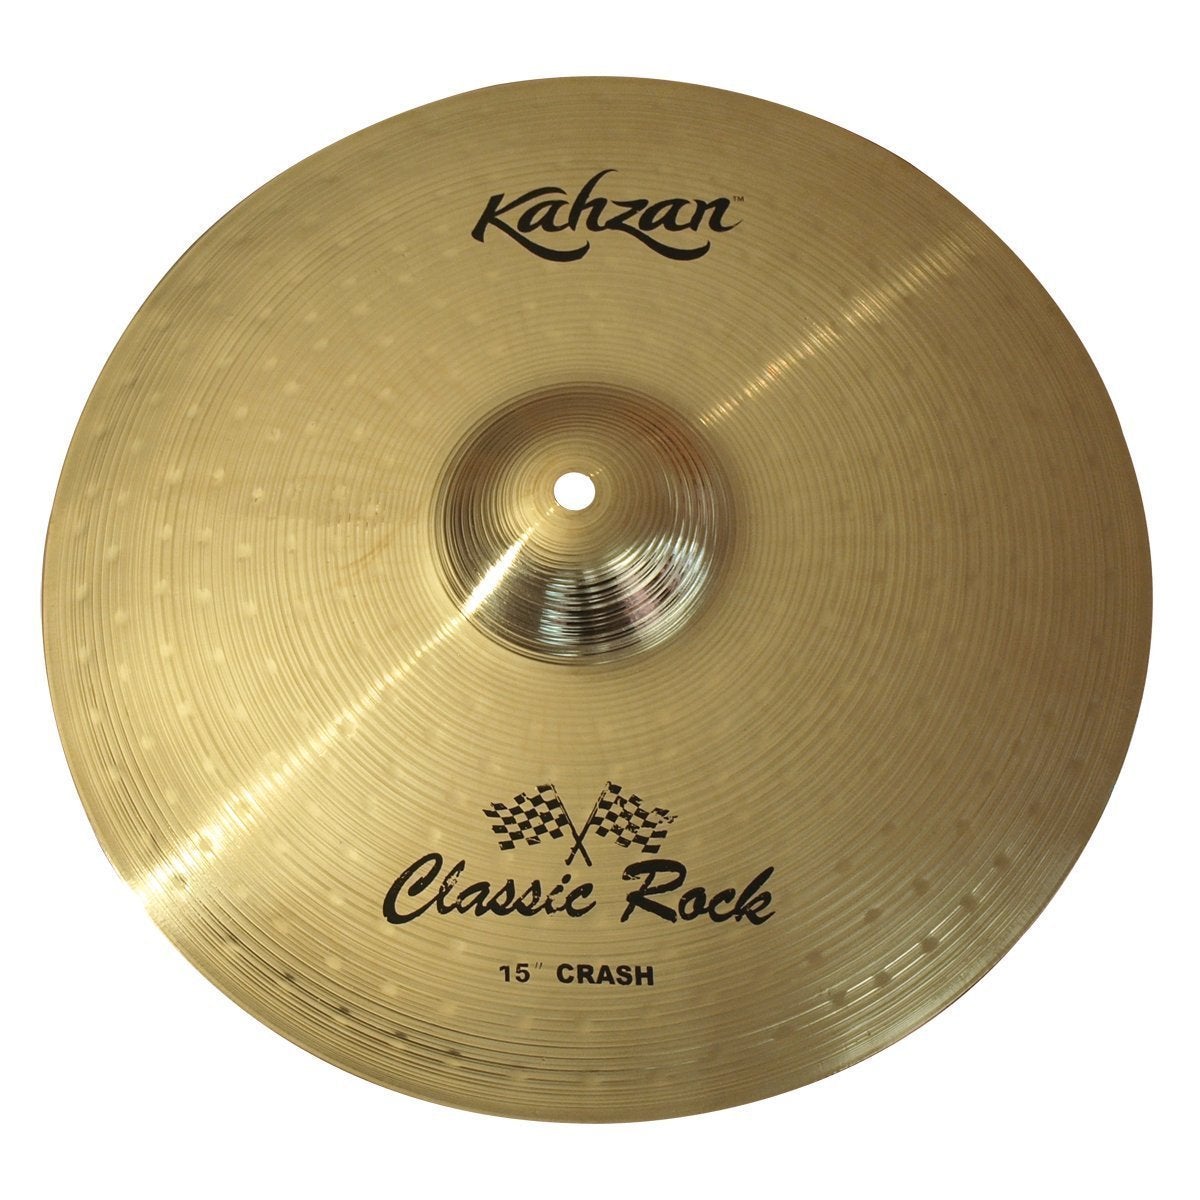 Kahzan 'Classic Rock Series' Crash Cymbal (15")